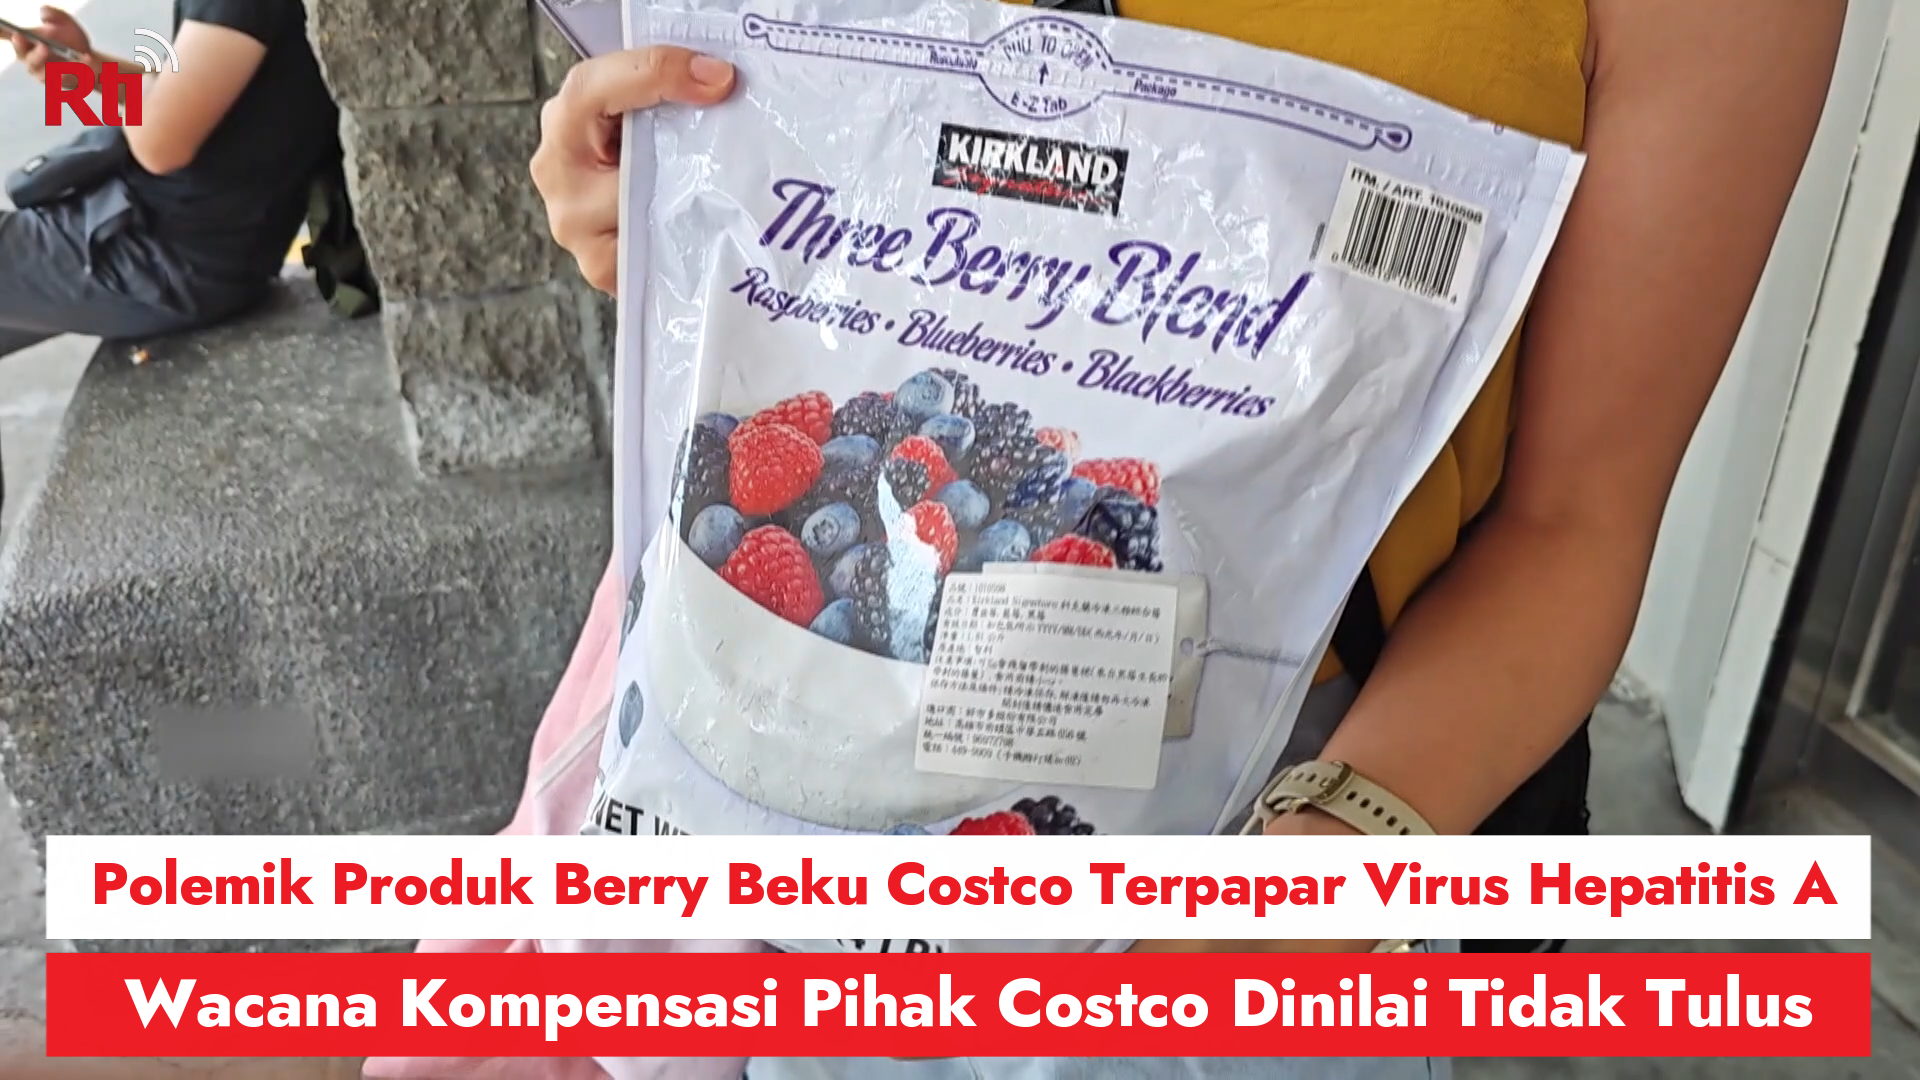 Polemik Produk Berry Beku Costco Terpapar Virus Hepatitis A, Wacana Kompensasi Pihak Costco Dinilai Tidak Tulus